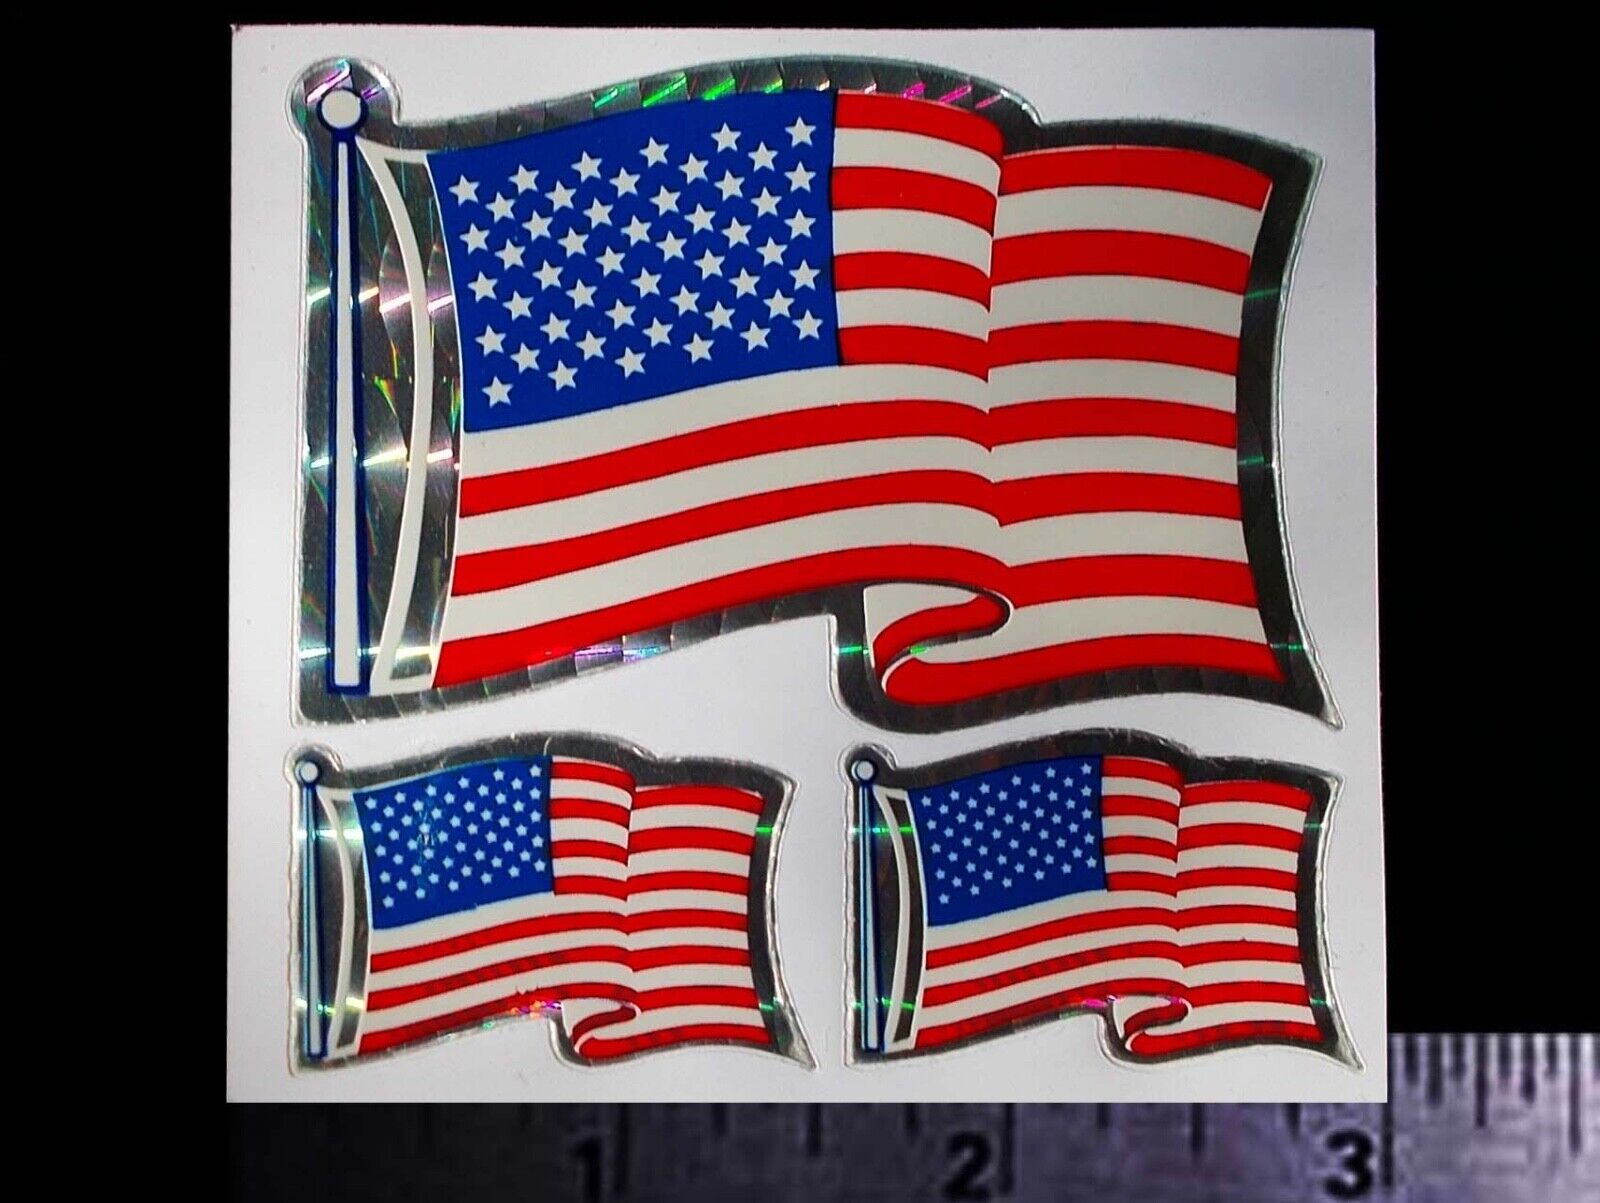 U.S.A. American Flag - Set of 3 Original Vintage Racing Decals/Stickers Patriot